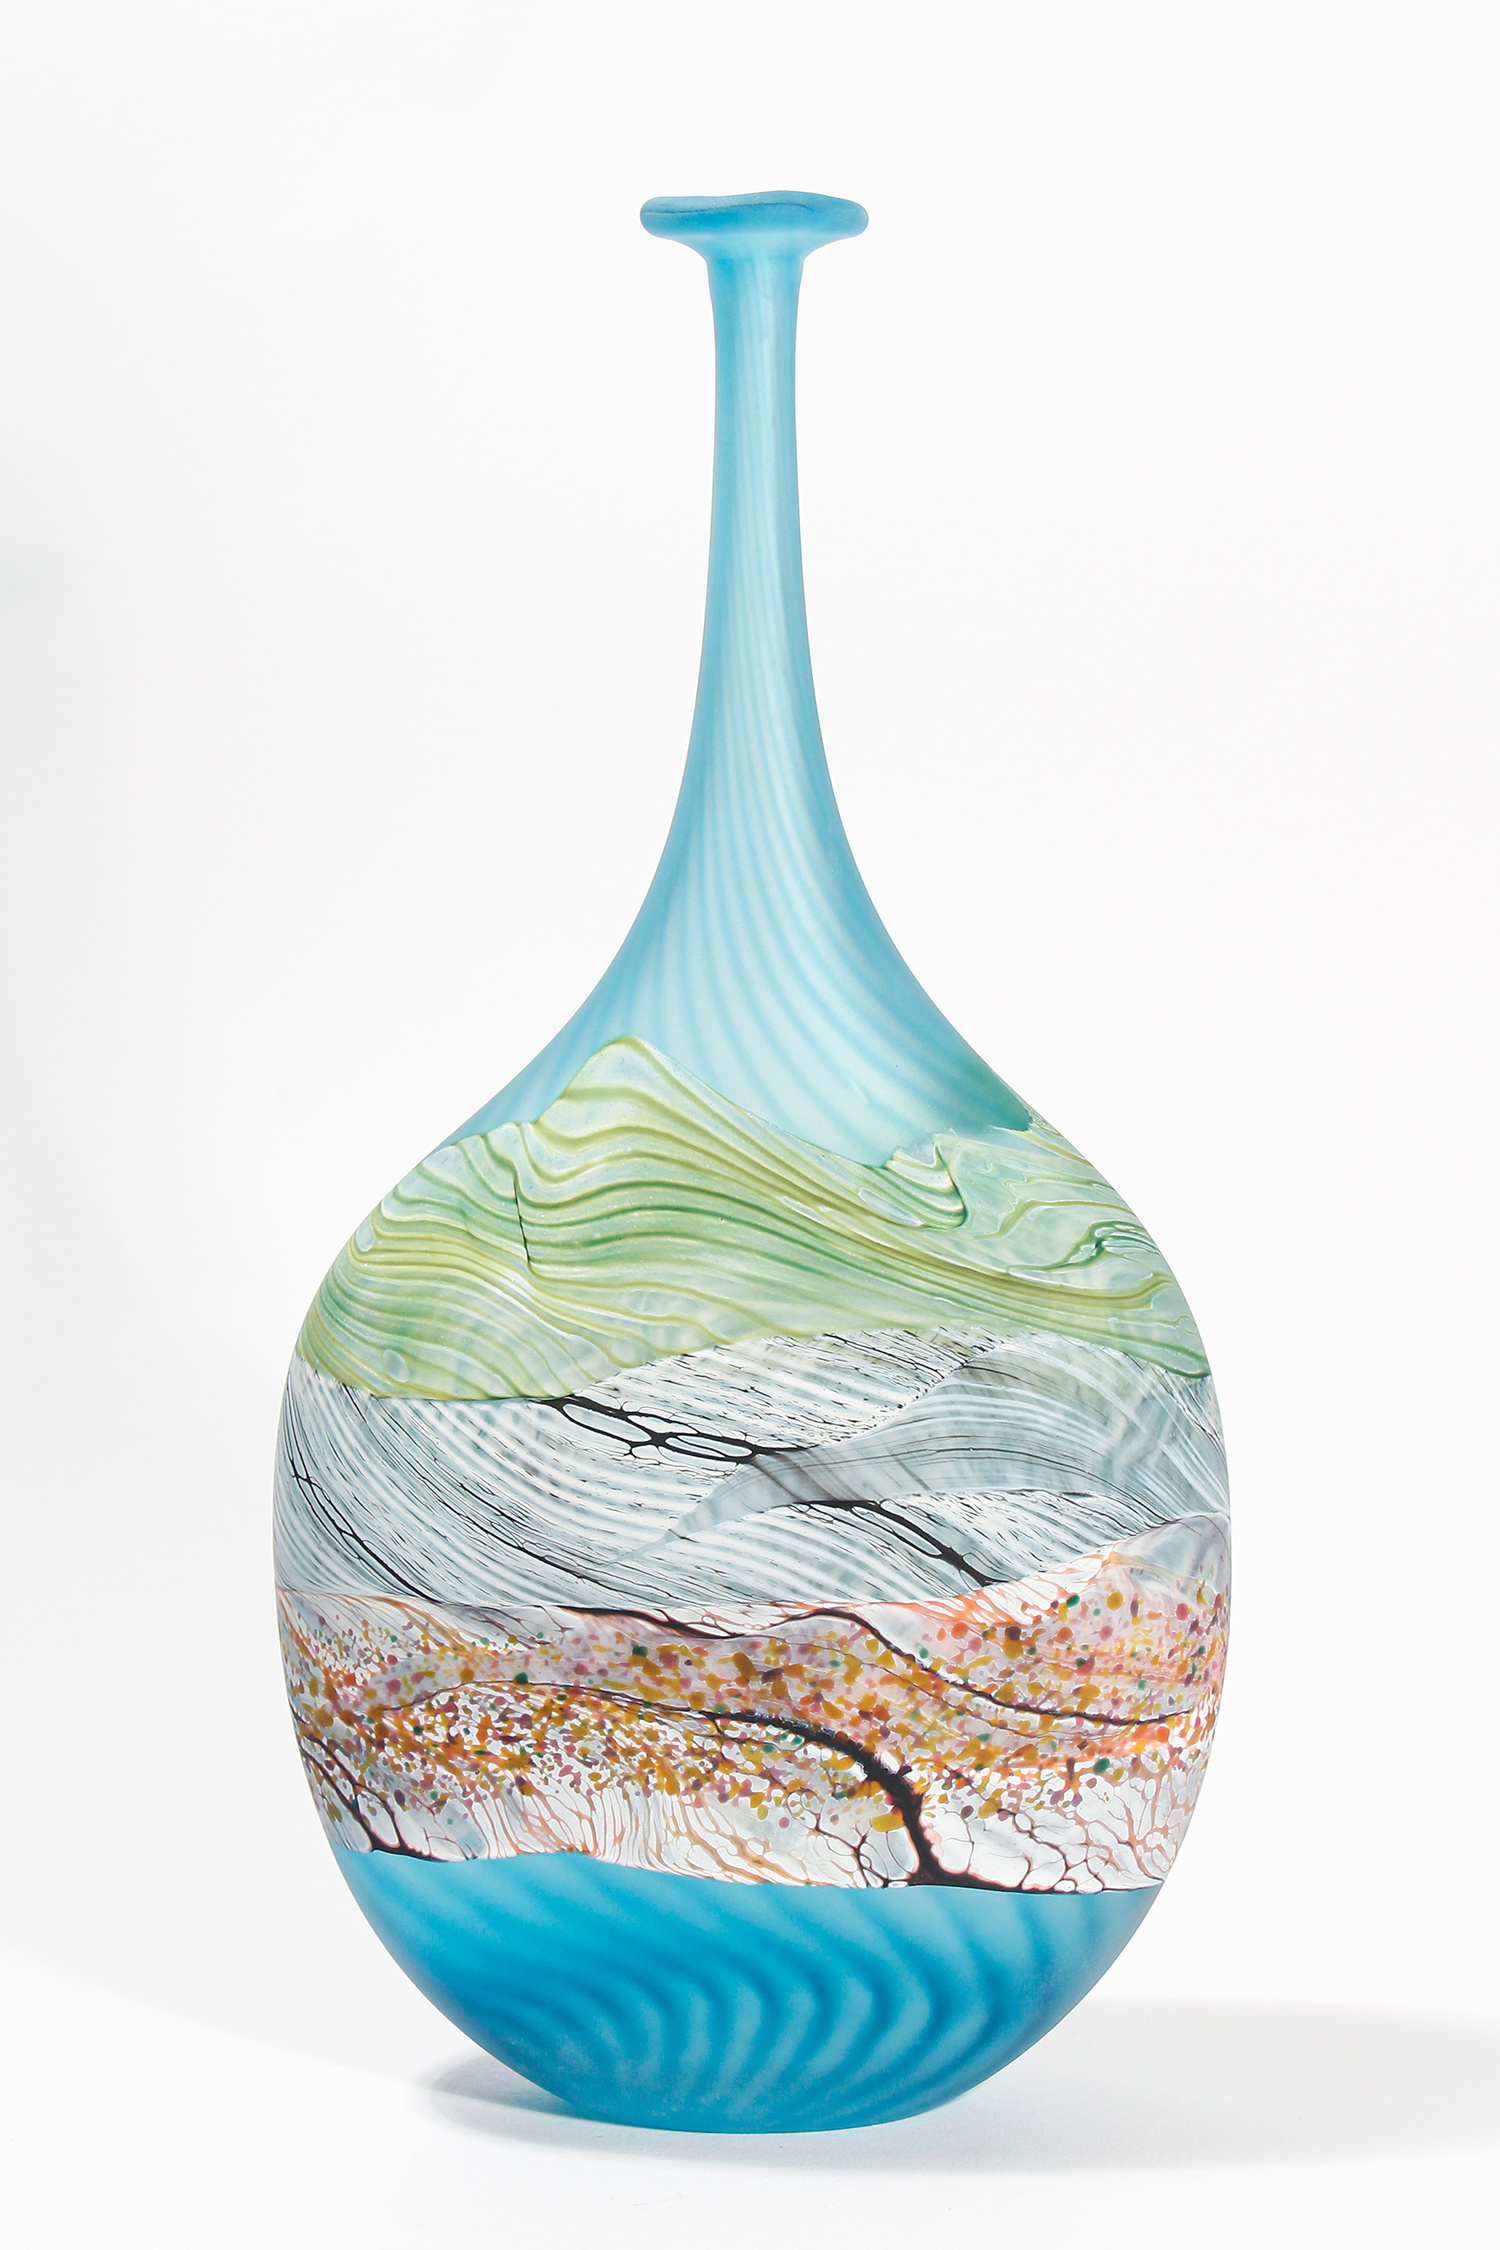 Flint Flattened Flask, medium by Thomas Petit